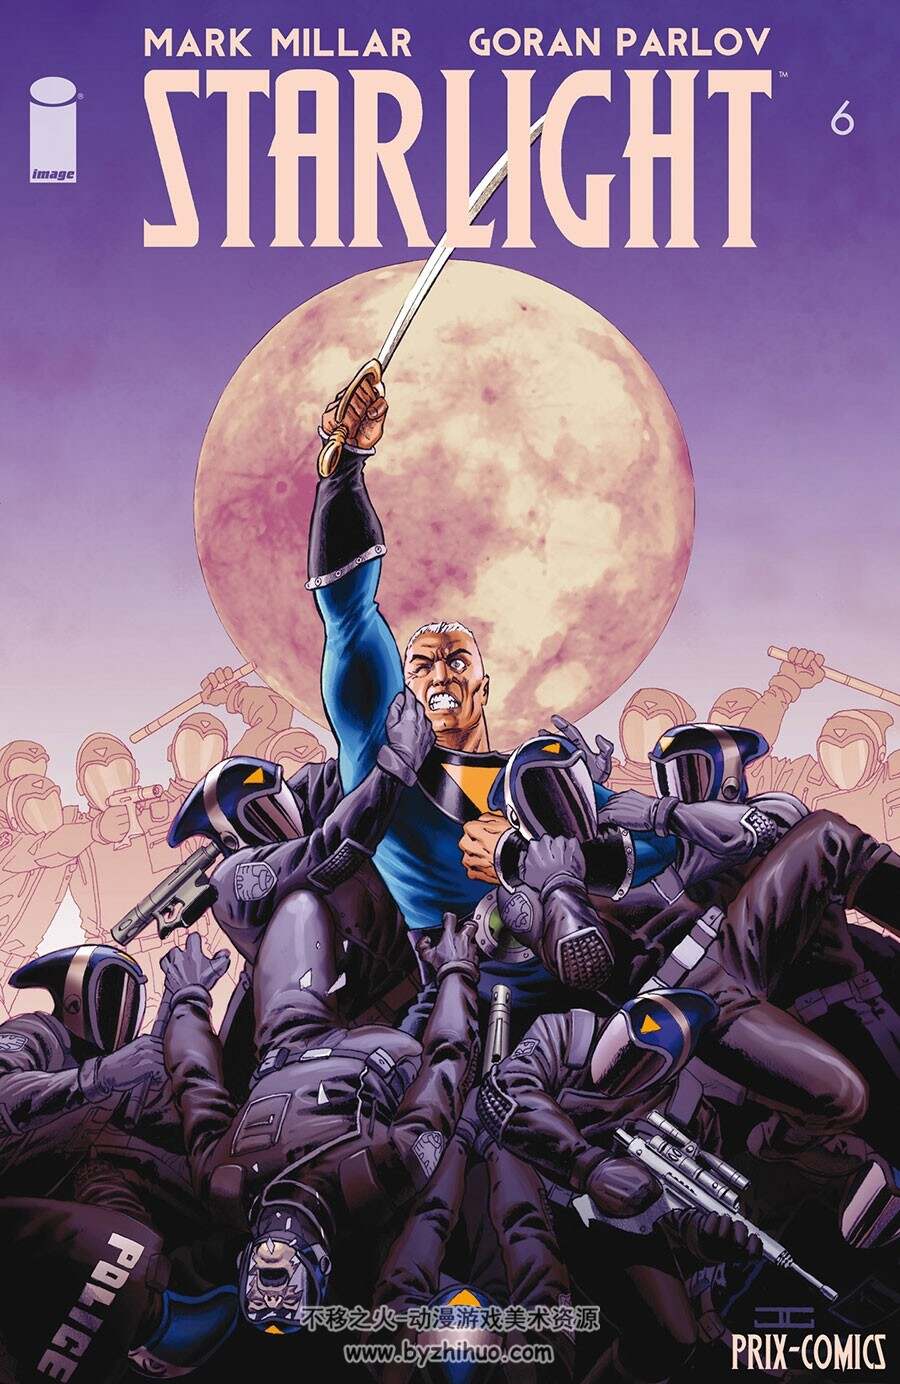 Starlight 1-6册 Mark Millar - Goran Parlov 西班牙语彩色科幻漫画